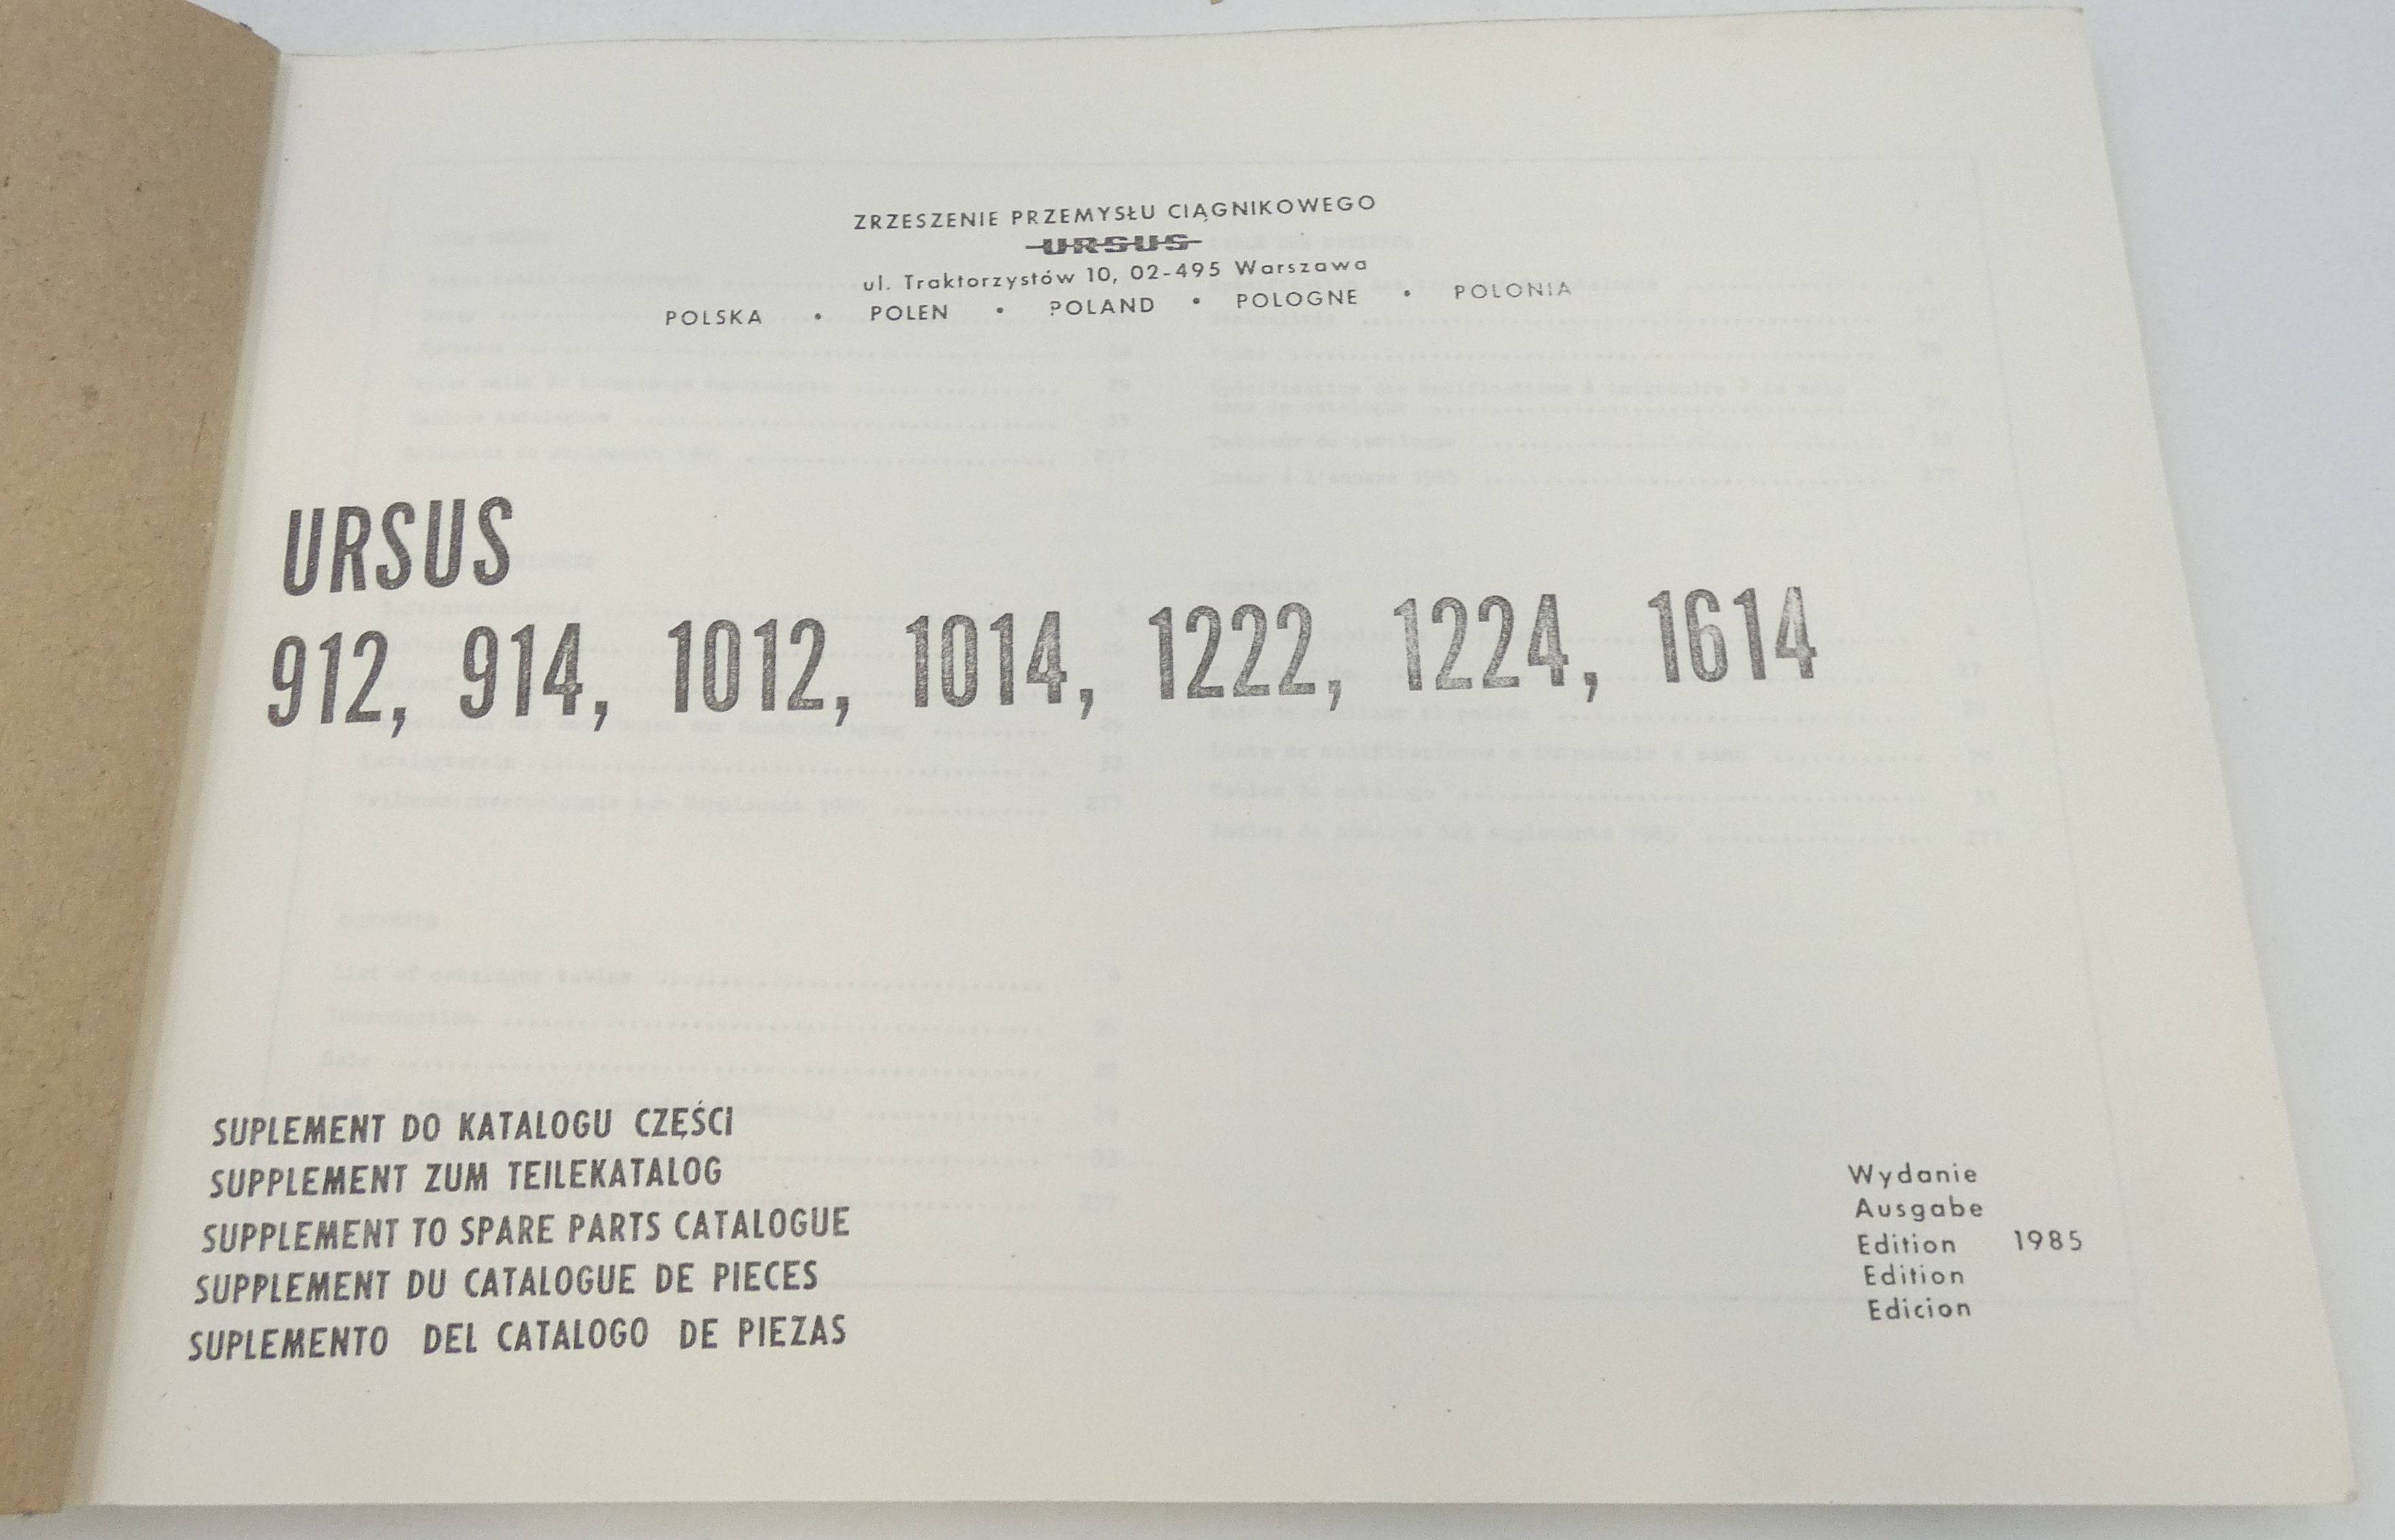 Ursus 912, 914, 1012, 1014, 1222, 1224, 1614 supplement to spare parts catalogue